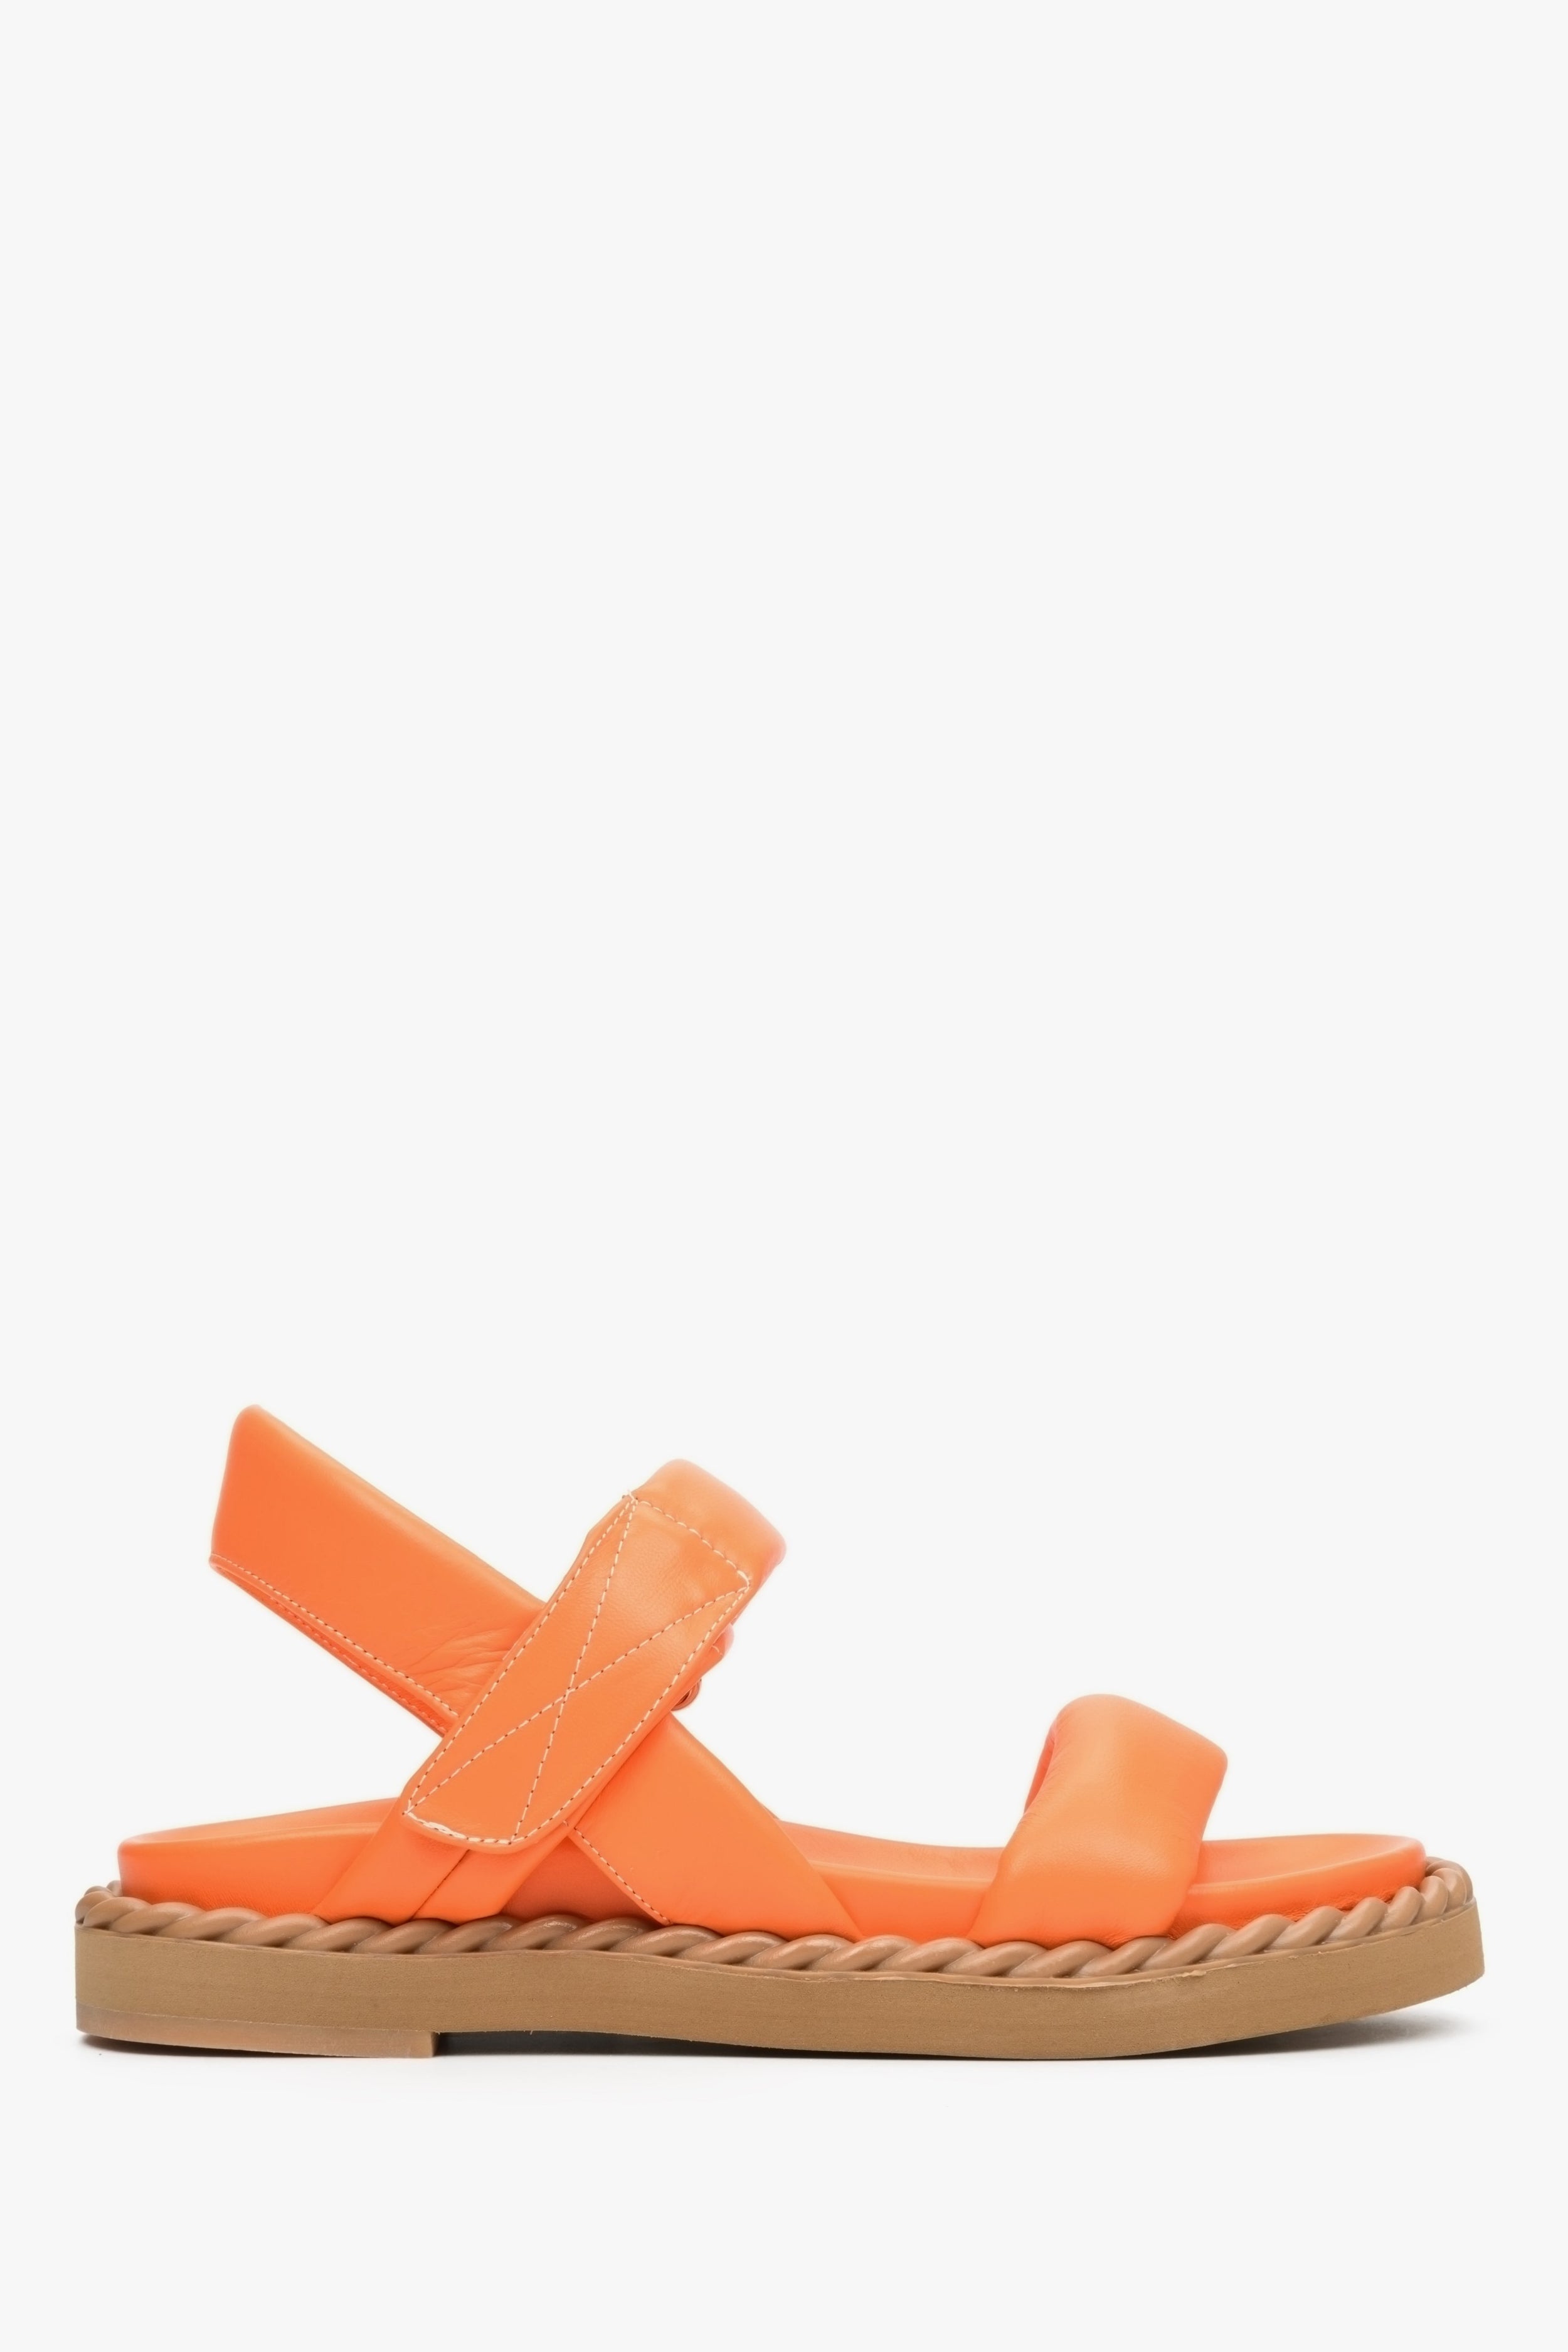 Estro: Pomarańczowe sandały damskie ze skóry naturalnej na lato